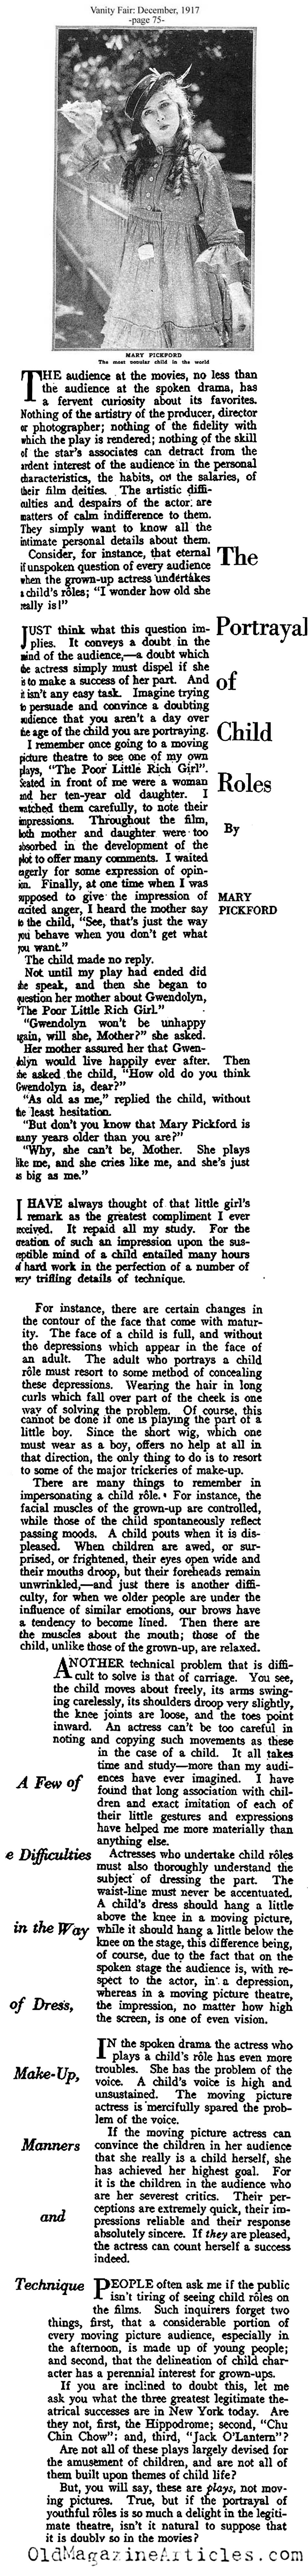 Mary Pickford  Considers Her Rolls  (Vanity Fair, 1920)